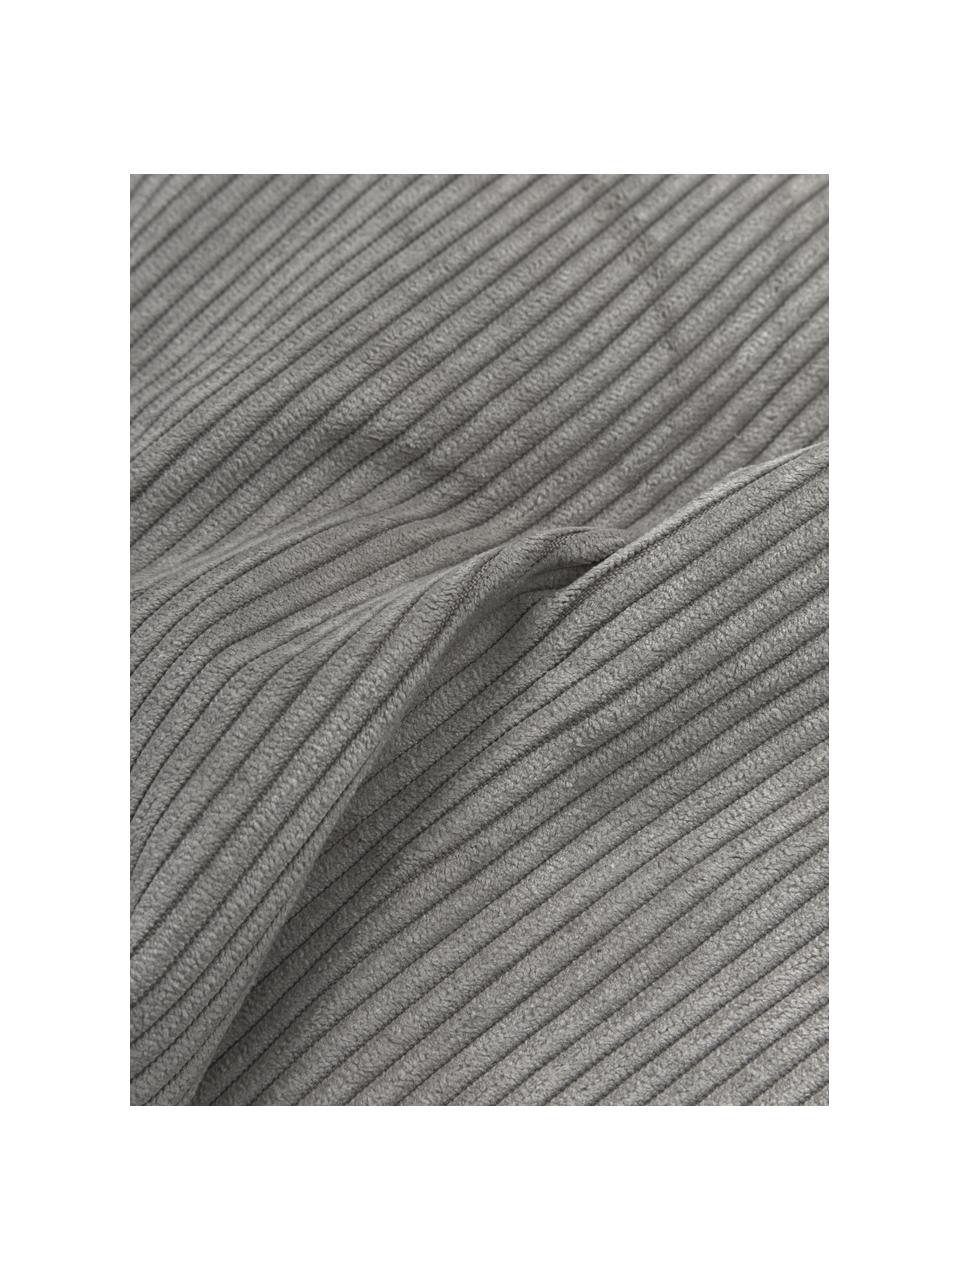 Sofa-Kissen Lennon in Grau aus Cord, Bezug: Cord (92% Polyester, 8% P, Cord Grau, B 60 x L 60 cm